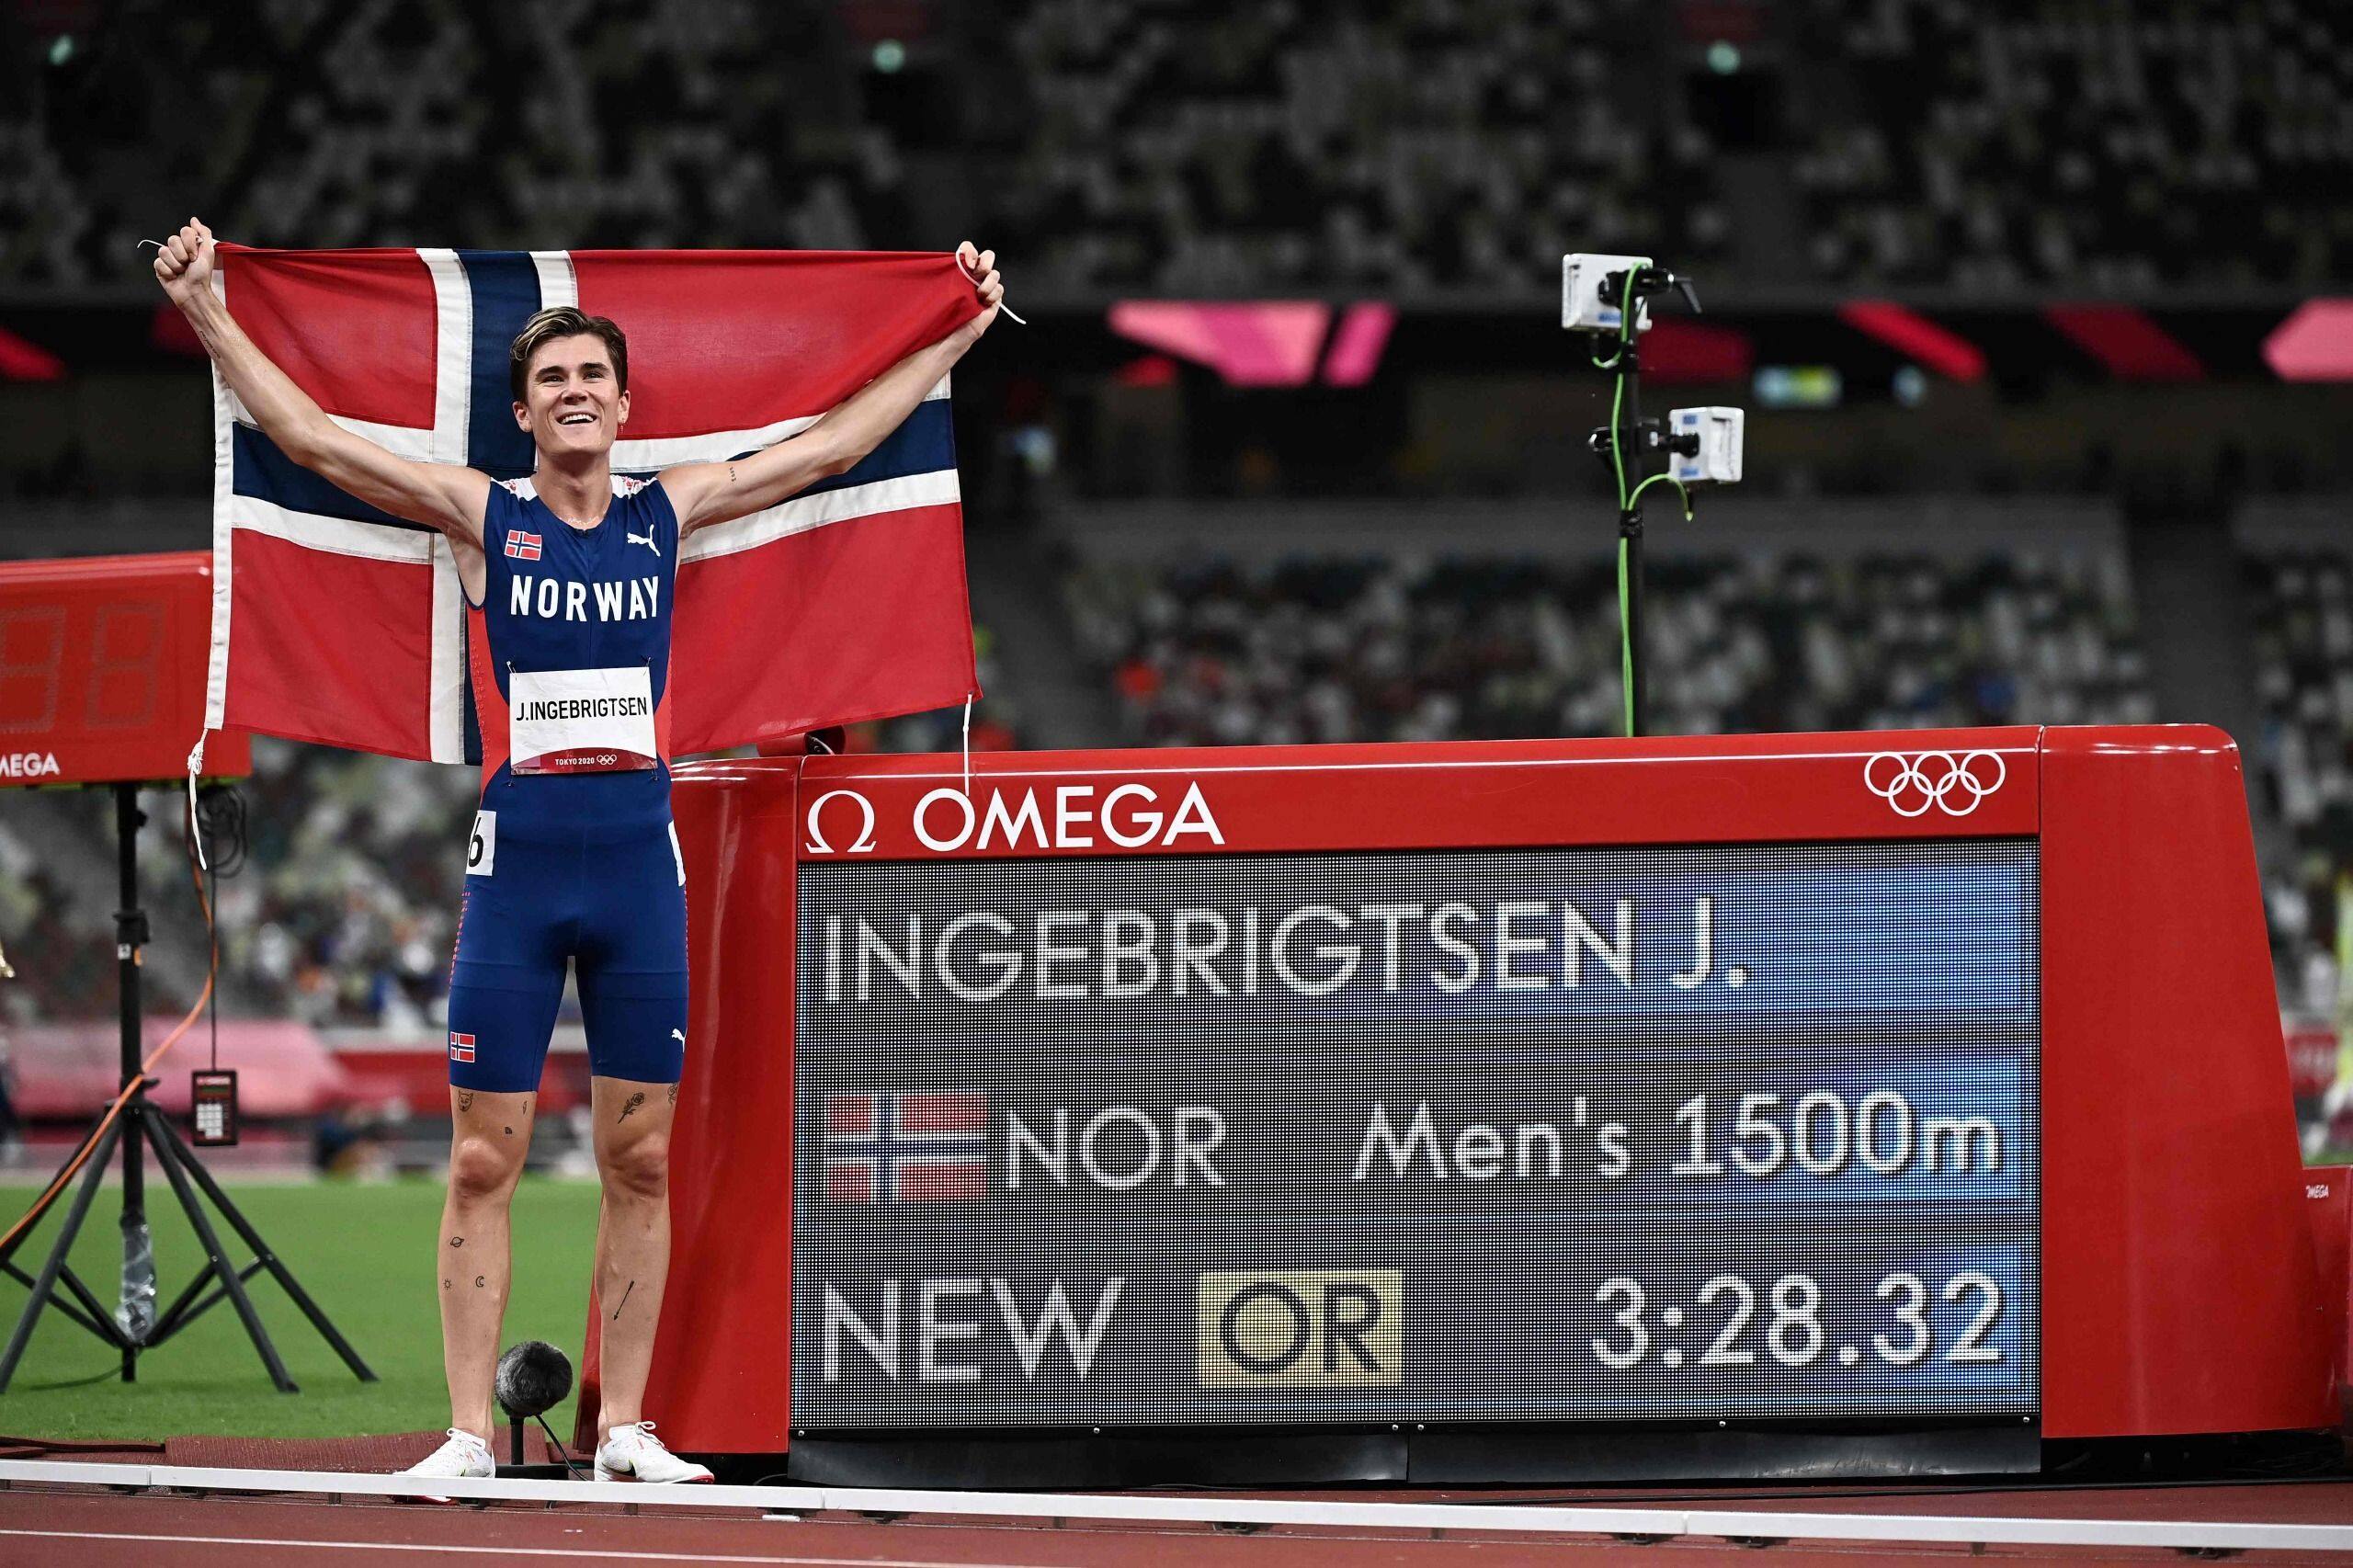 Jo 2020 Le Norvegien Jakob Ingebrigtsen Sacre Champion Olympique Du 1500 M [ 1706 x 2560 Pixel ]